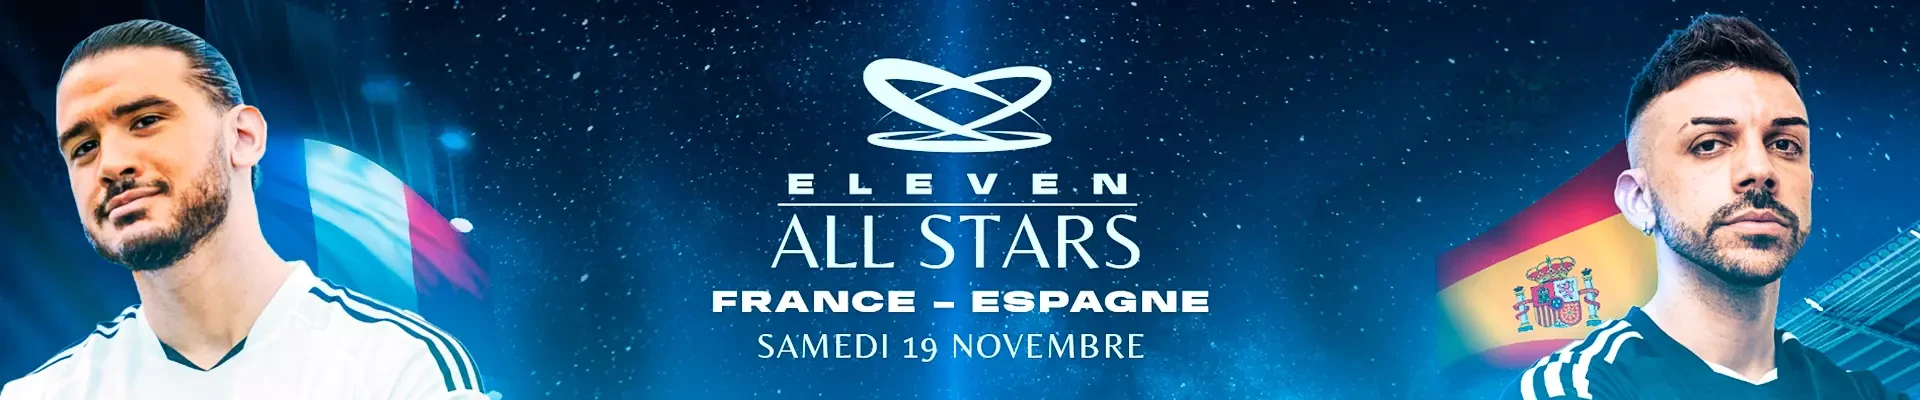 Eleven All Stars header